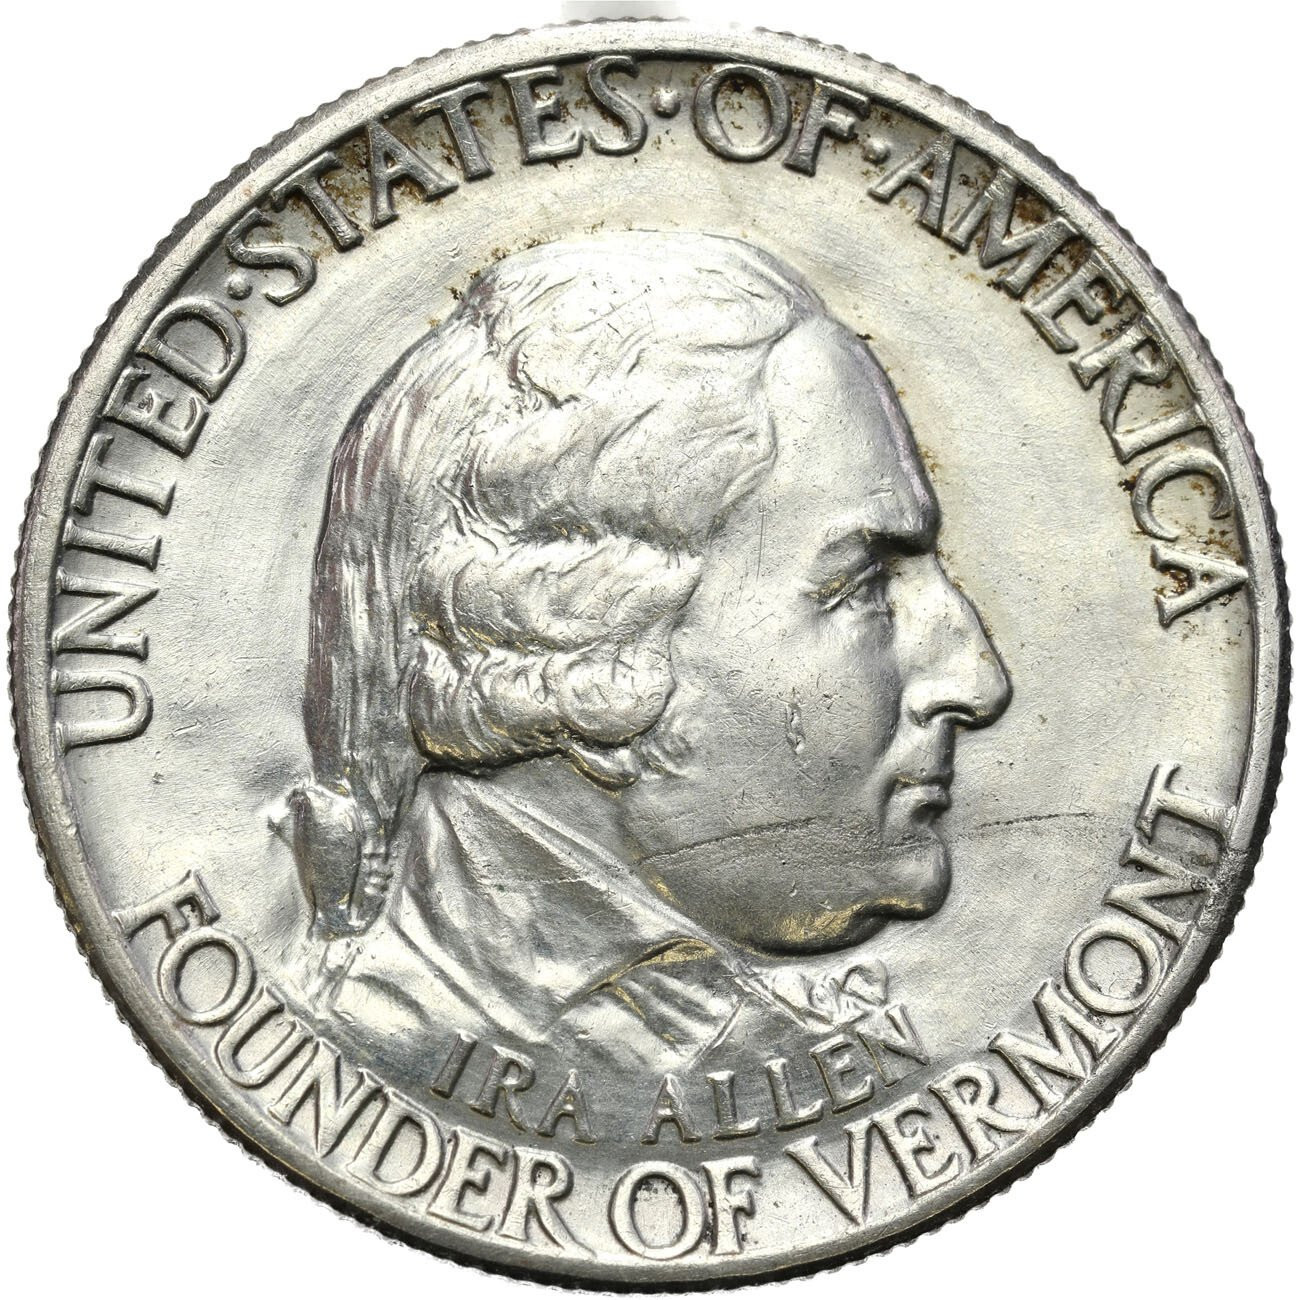 USA 1/2 dolara (50 centów) 1927 Vermon, Filadelfia